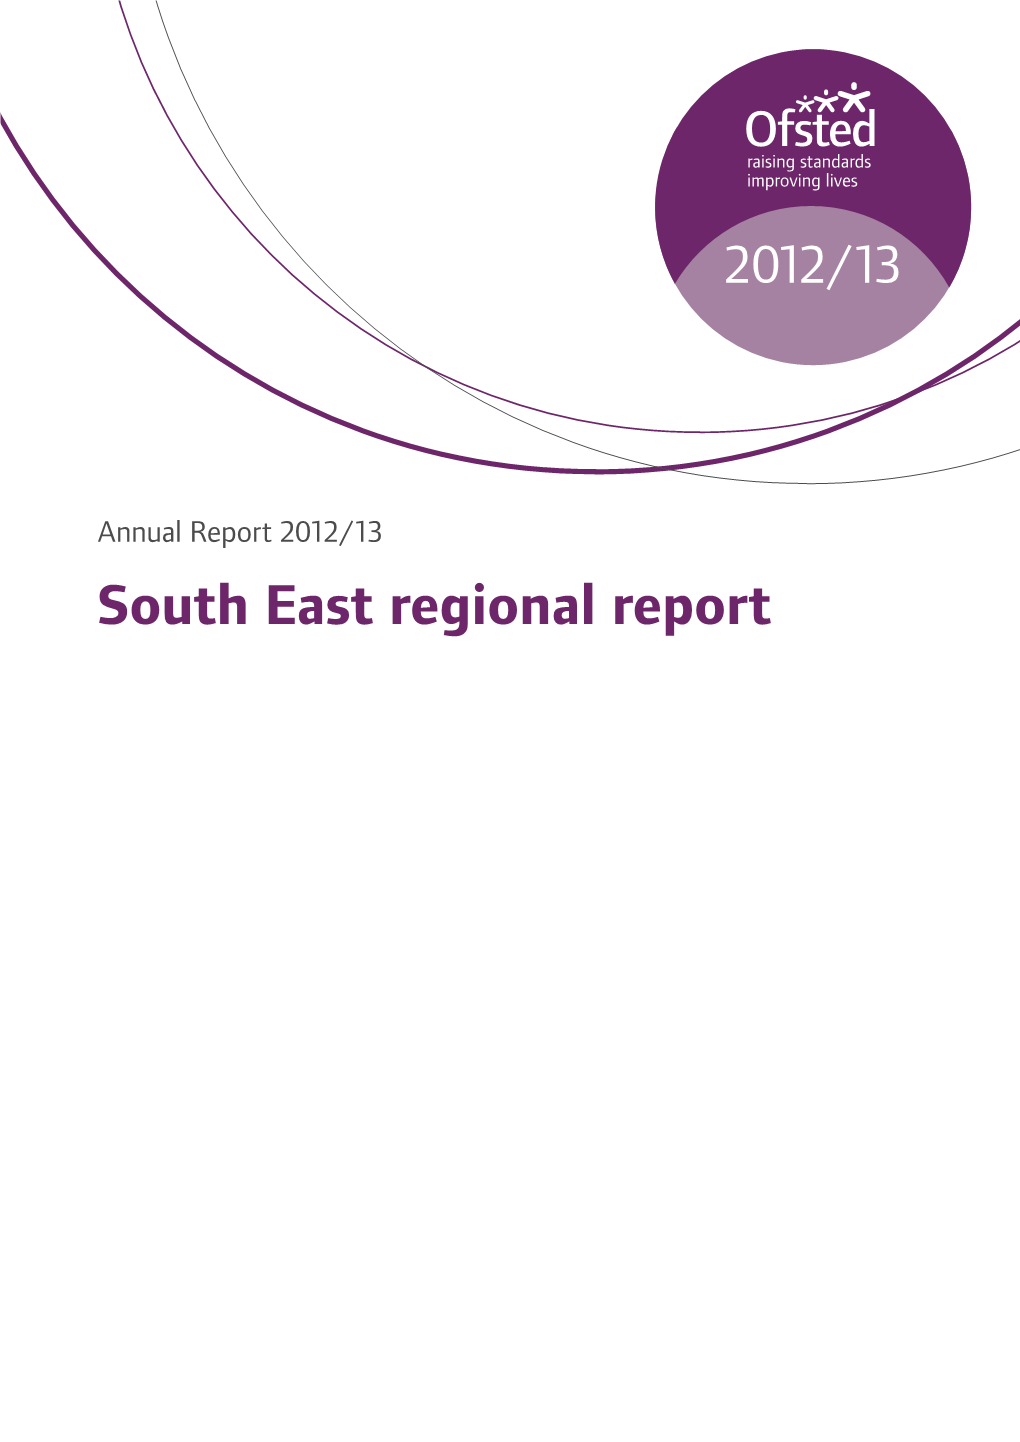 South East Regional Report South East Regional Report